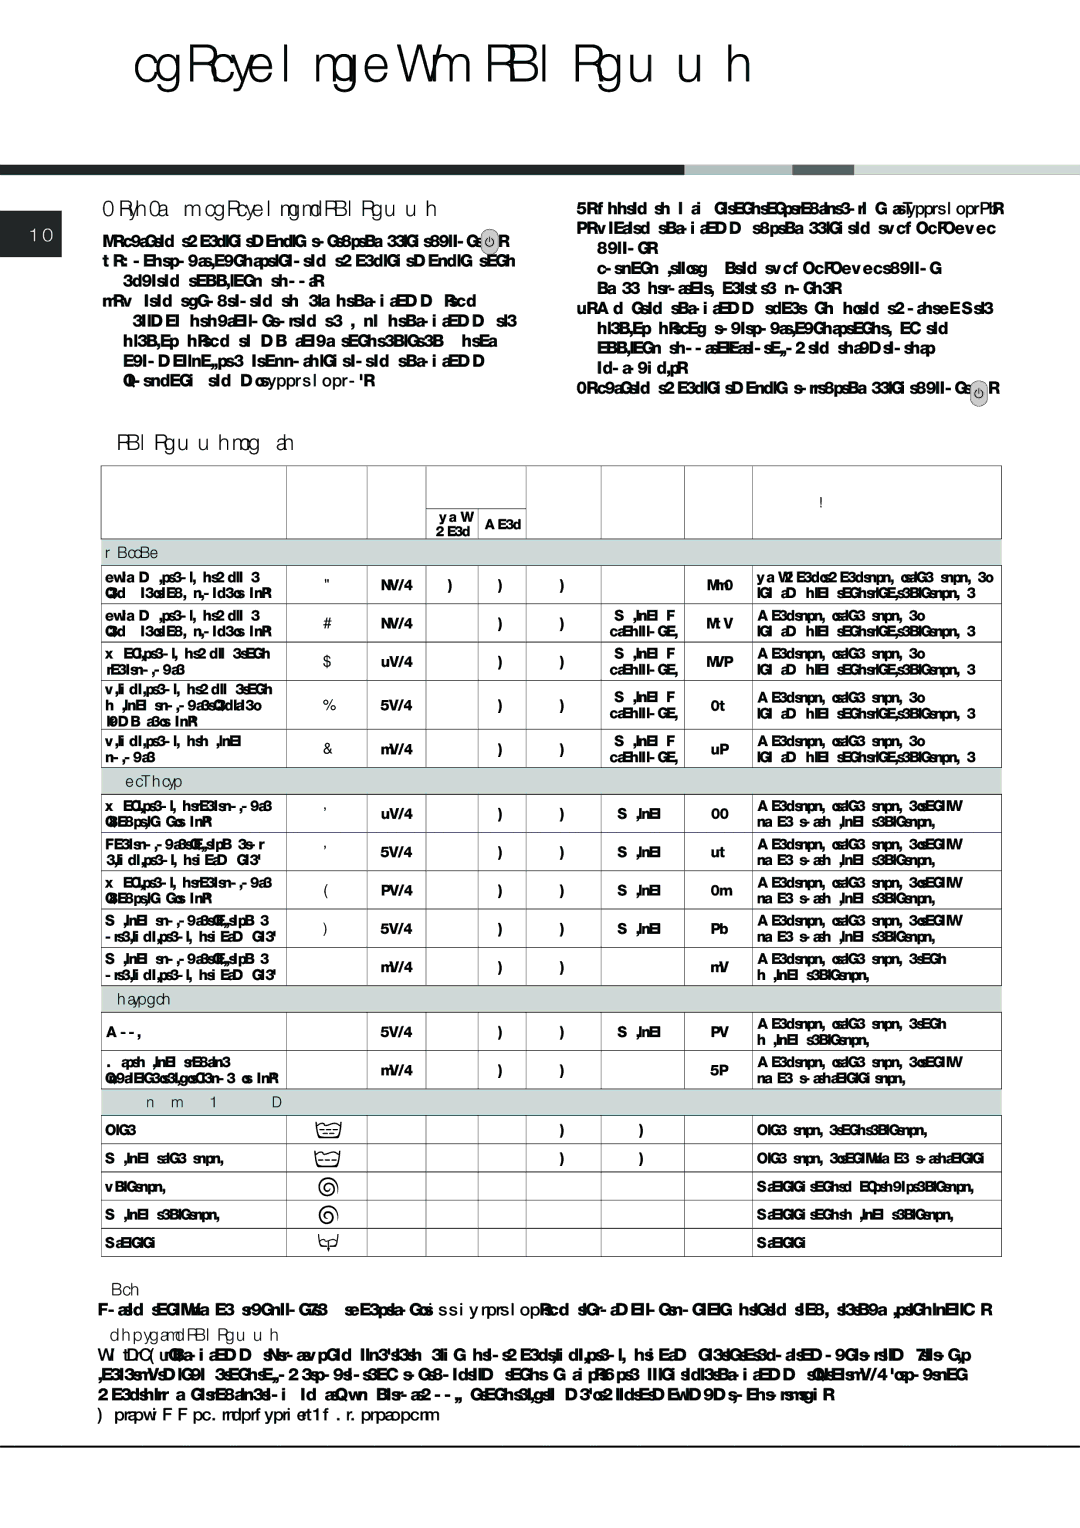 Ariston AVSD 109 manual Starting and Programmes, Briefly starting a programme, Programme table 